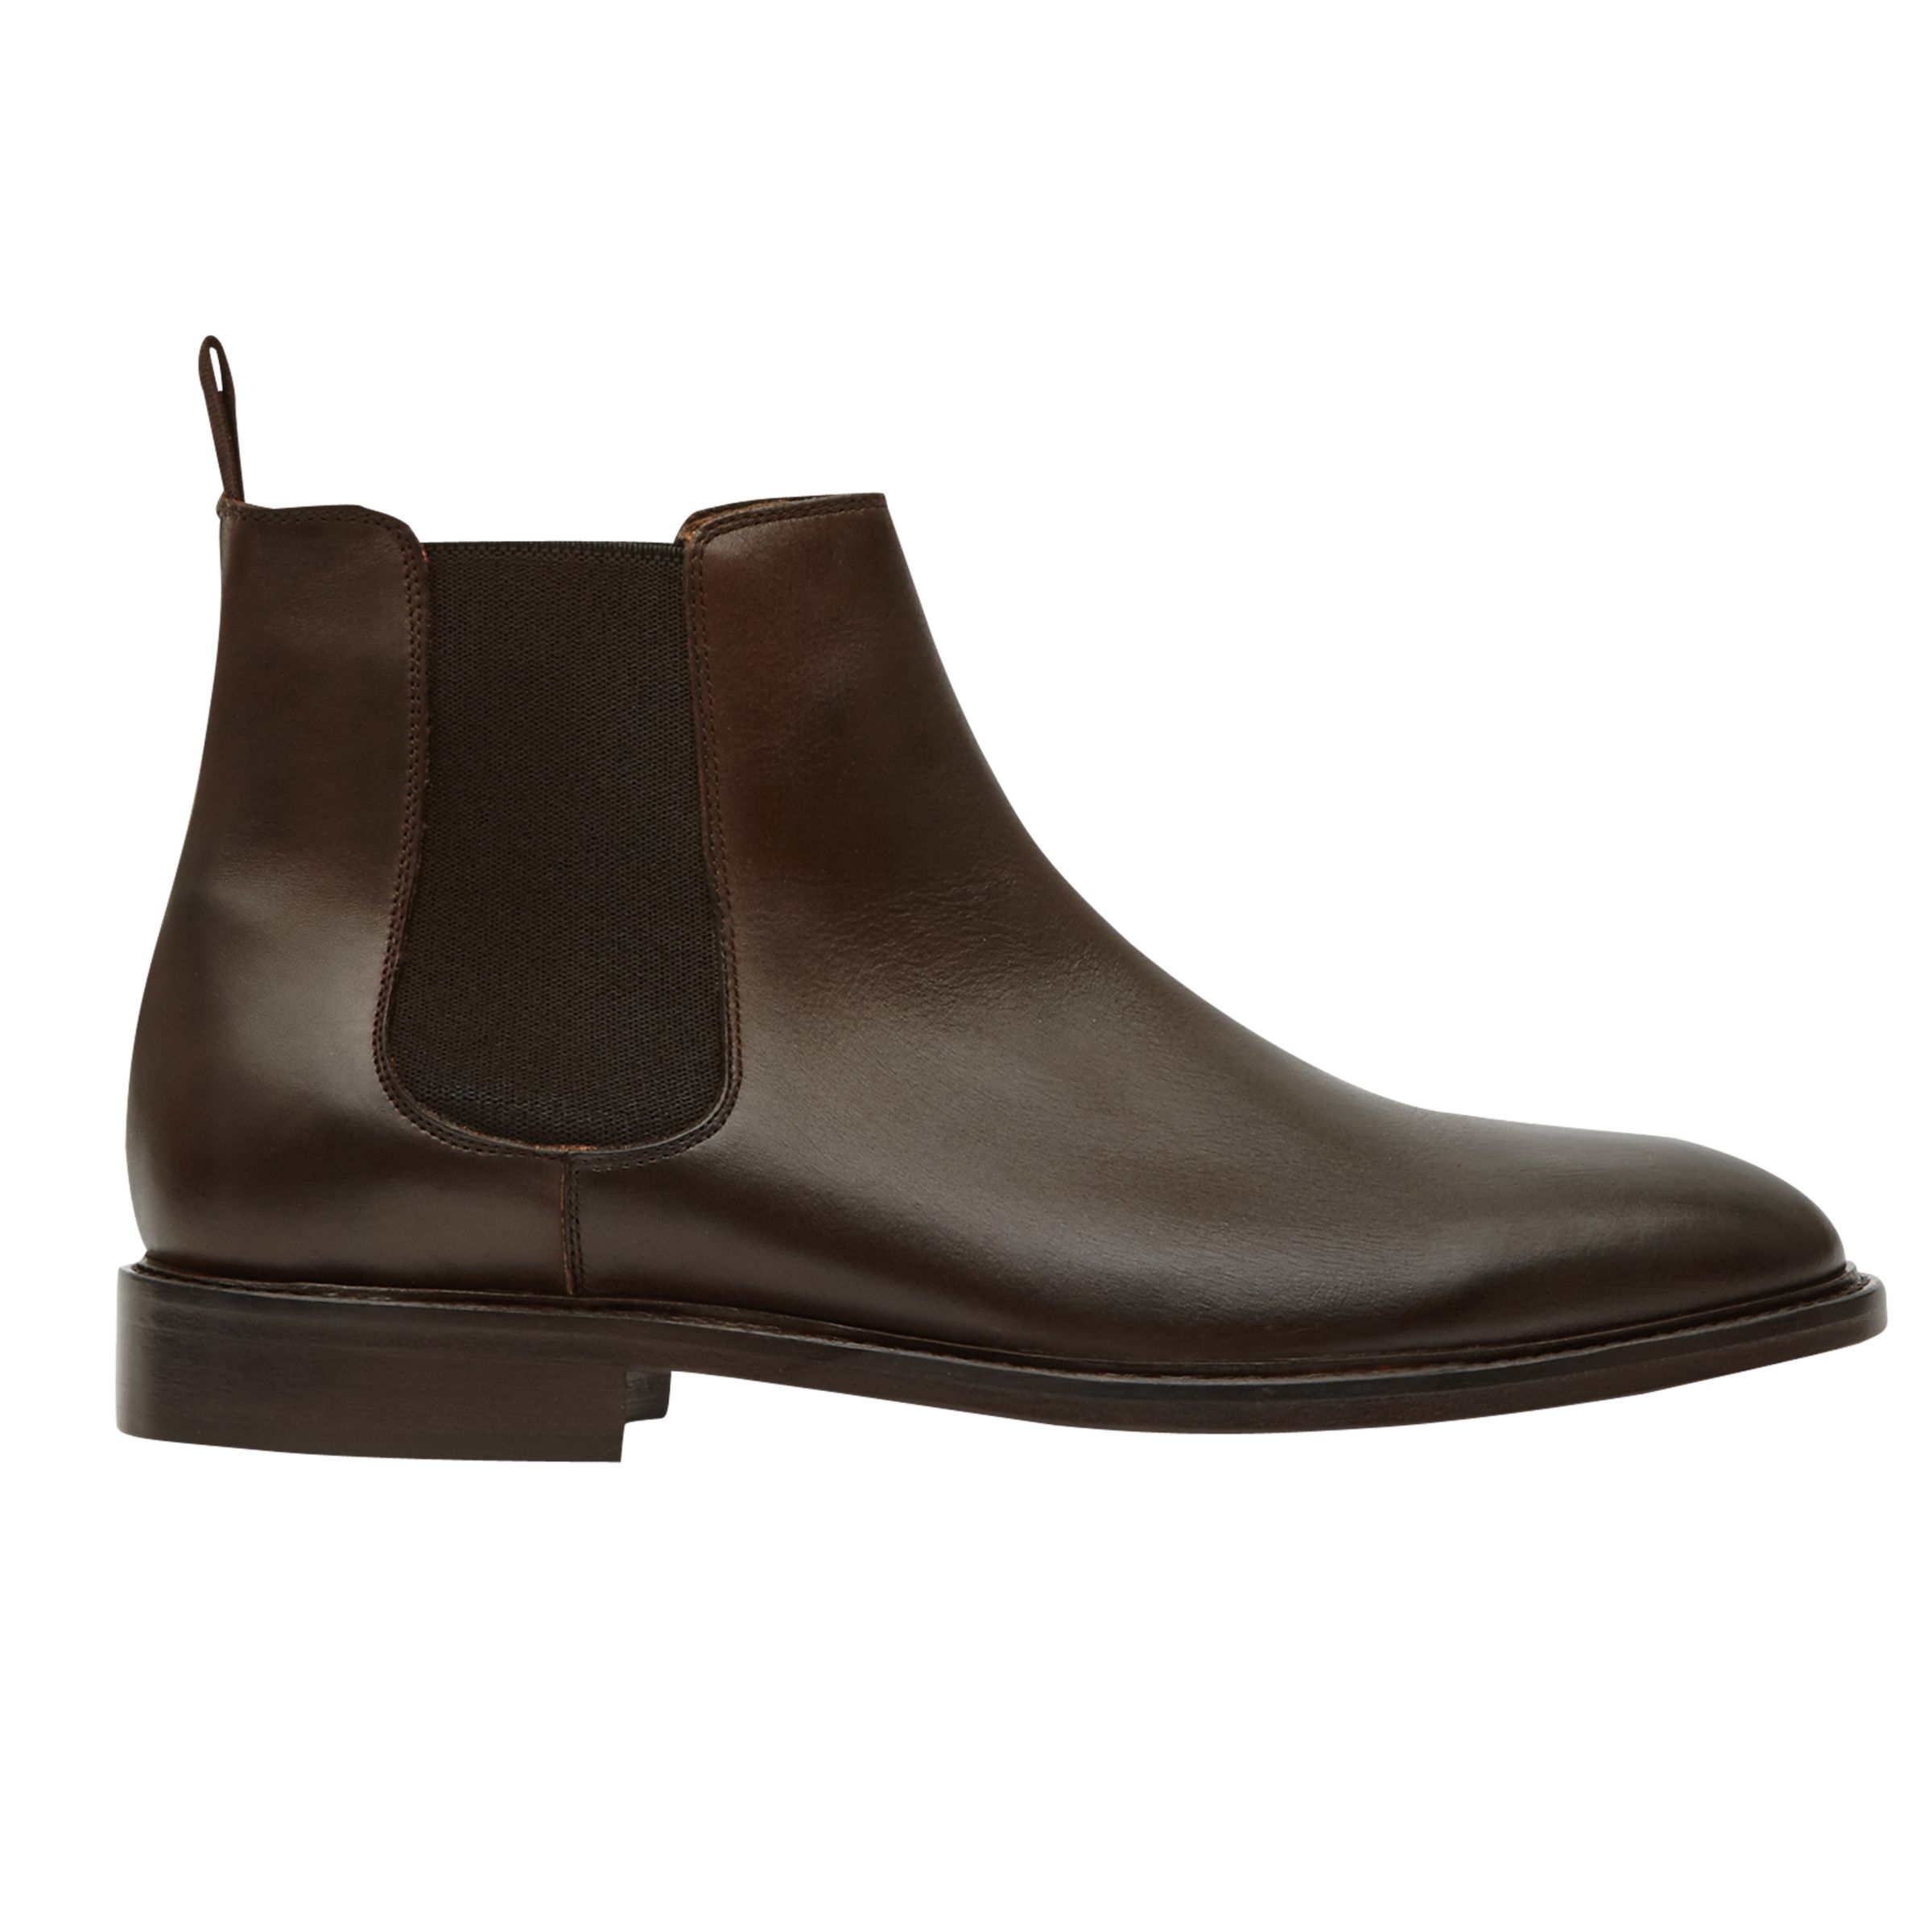 Reiss Tenor Leather Chelsea Boots, Dark Brown